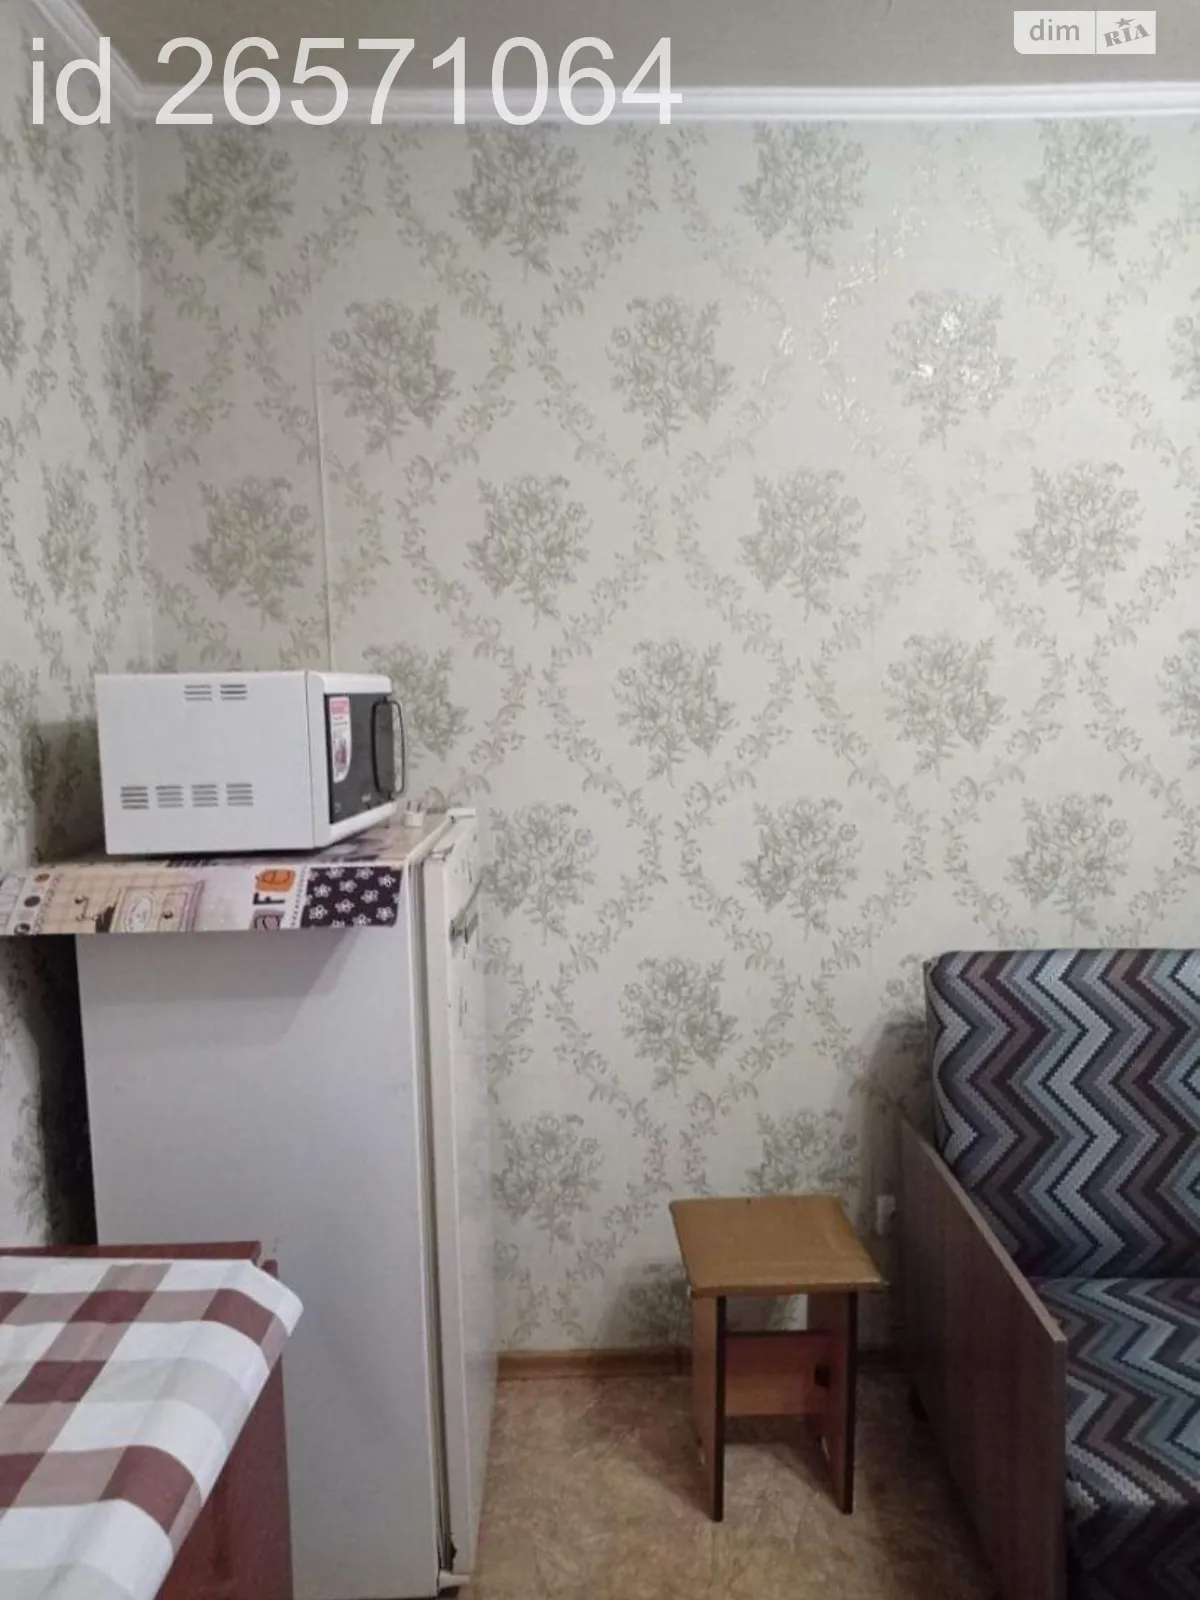 Продается комната 23 кв. м в Харькове - фото 3